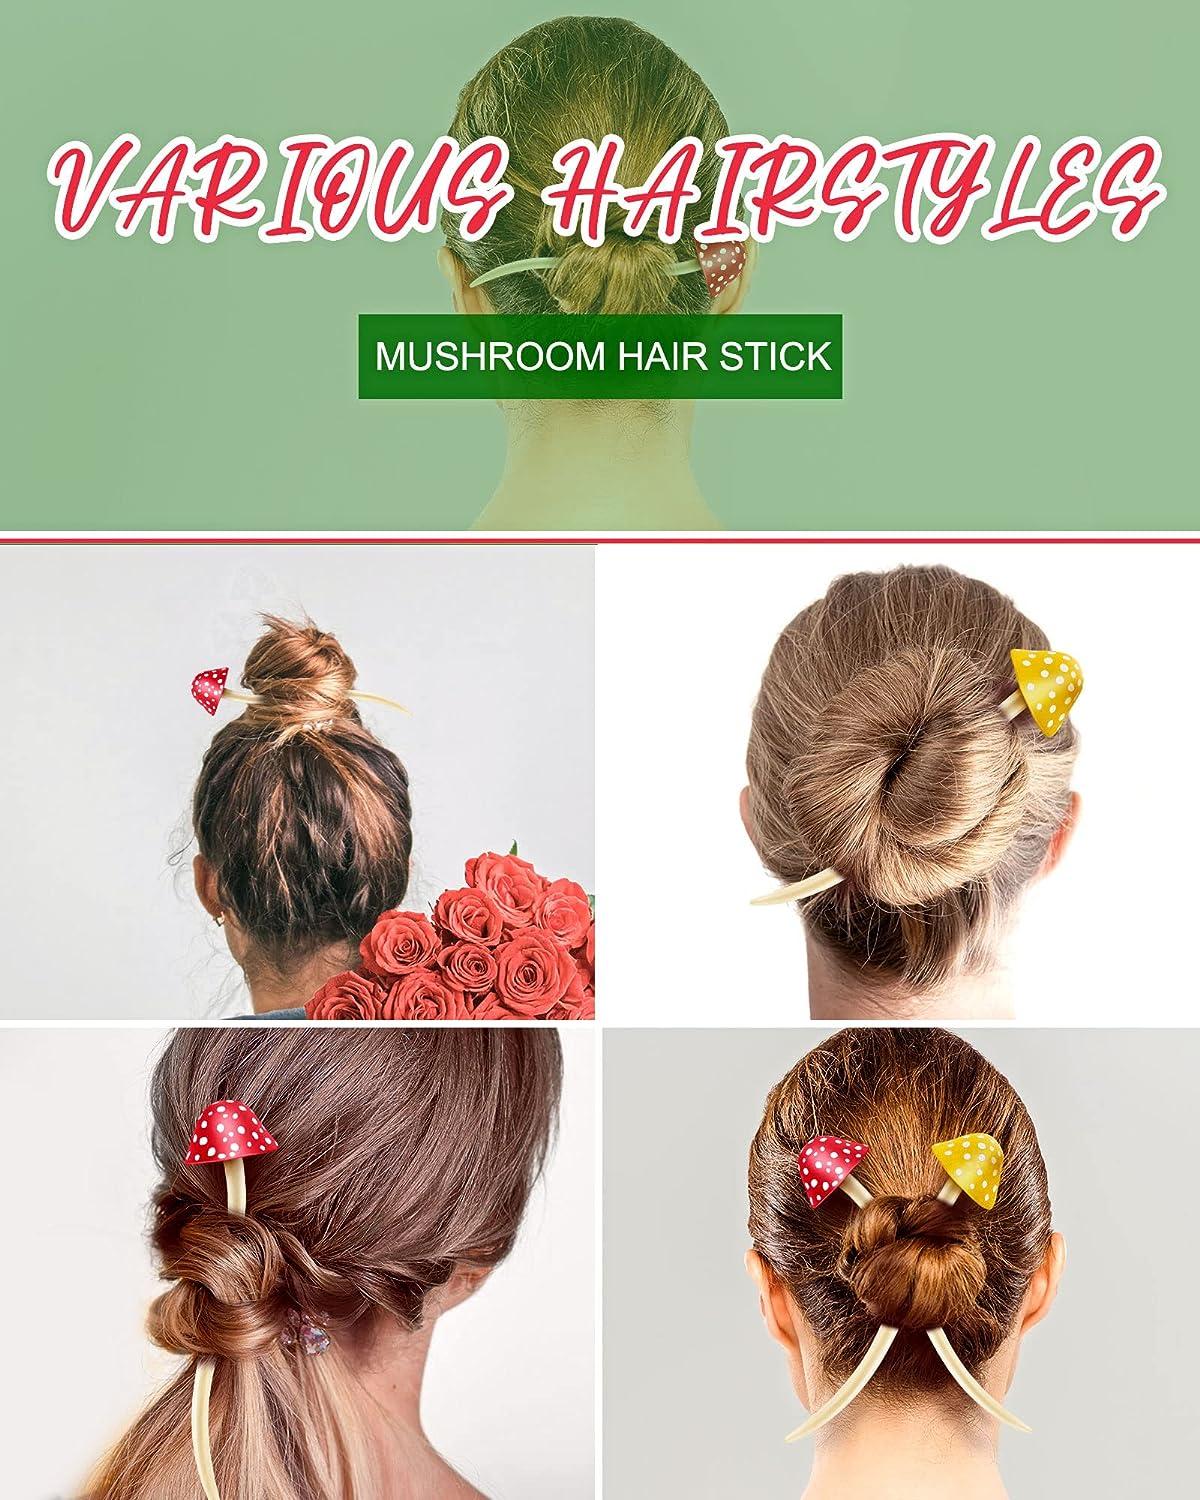 3 easy hairstyles using hair sticks feat. Saya Designs #turningheadsforgood  – Liz Bumgarner